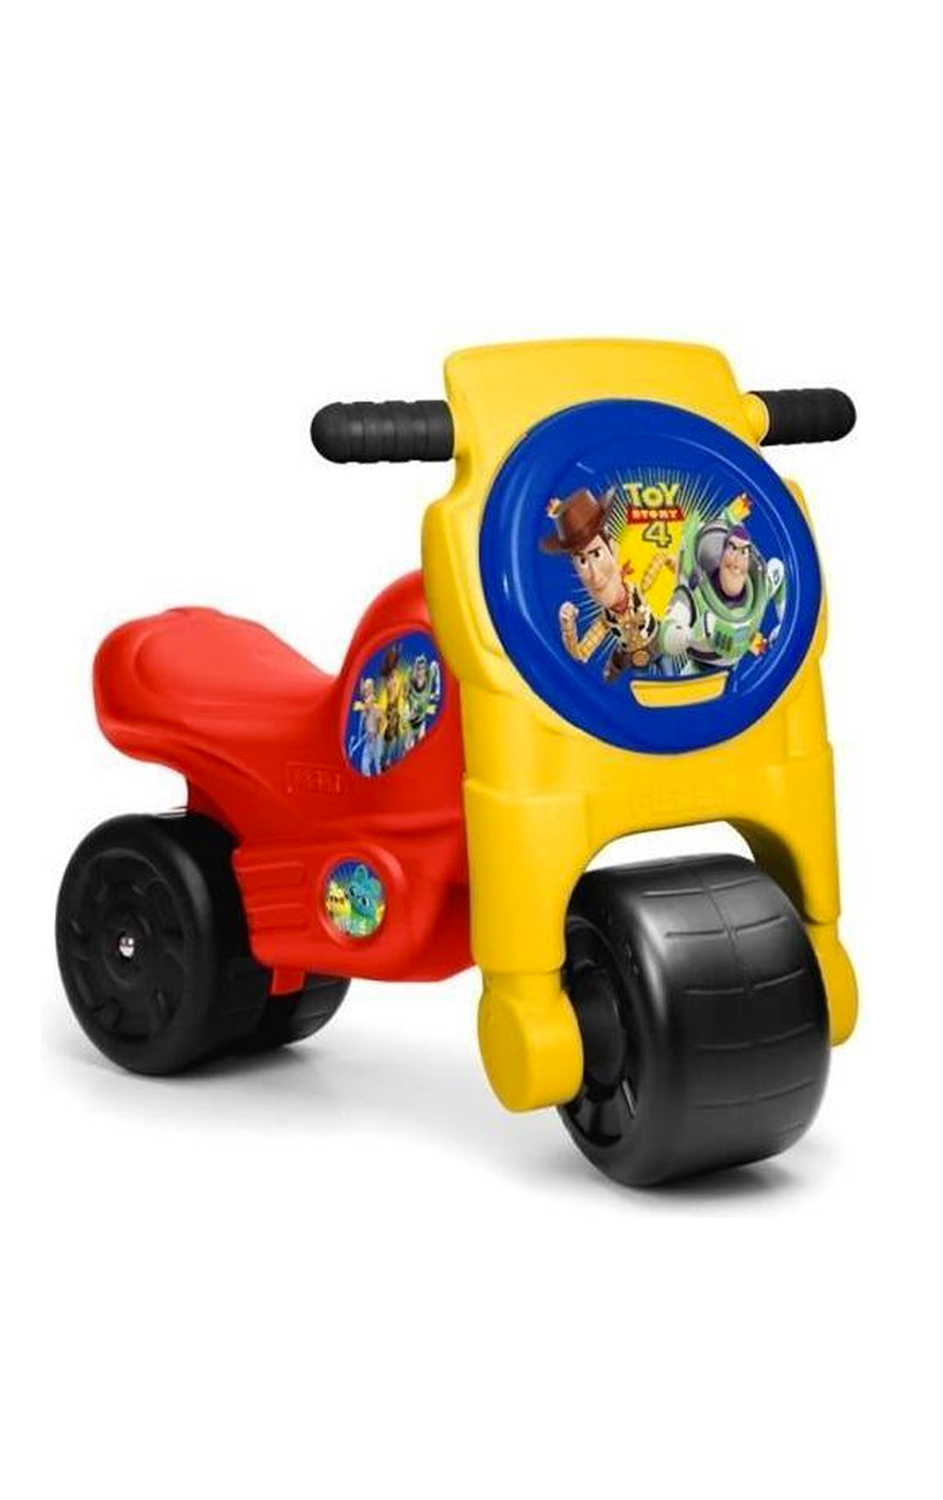 Toy Story 4 Primipassi Moto Jumper 800012186